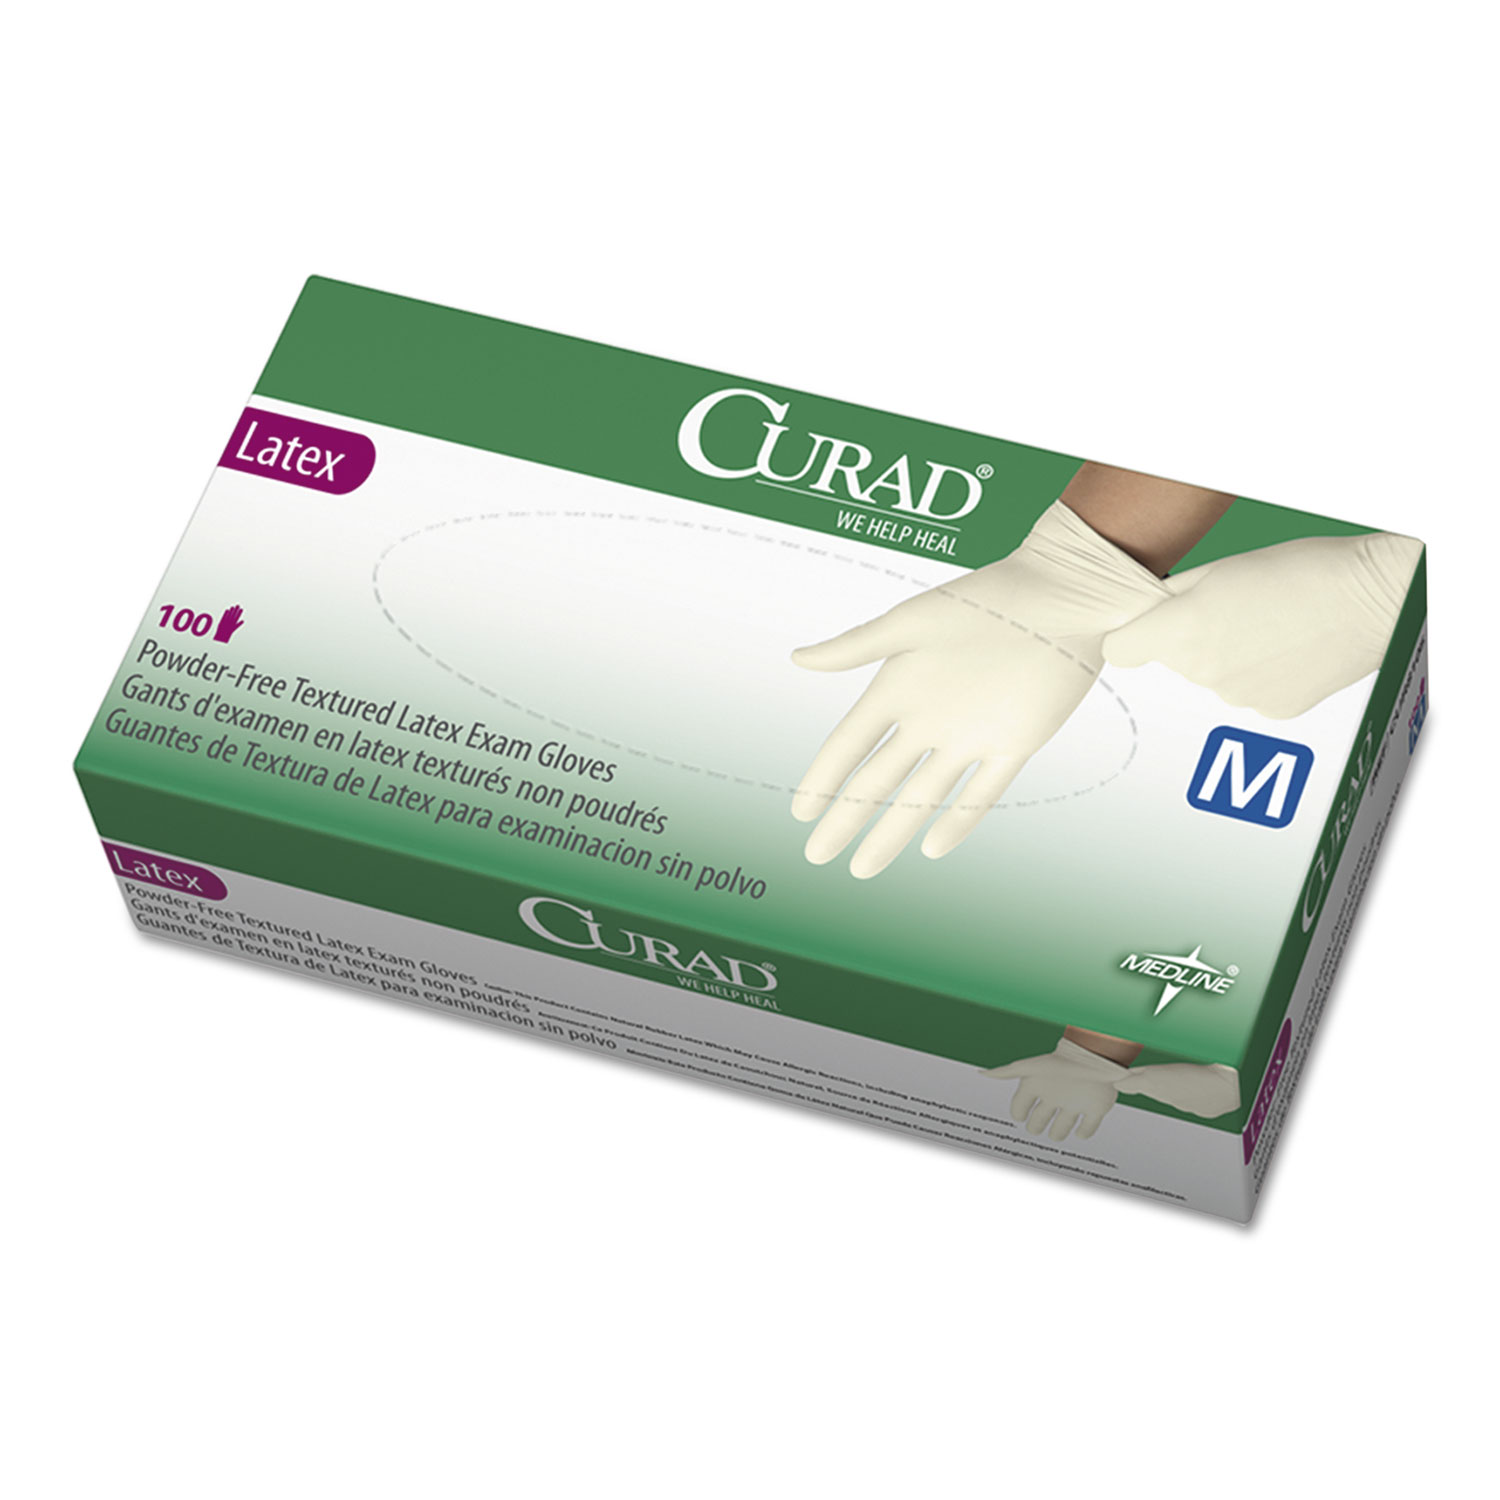  Curad CUR8105 Latex Exam Gloves, Powder-Free, Medium, 100/Box (MIICUR8105) 